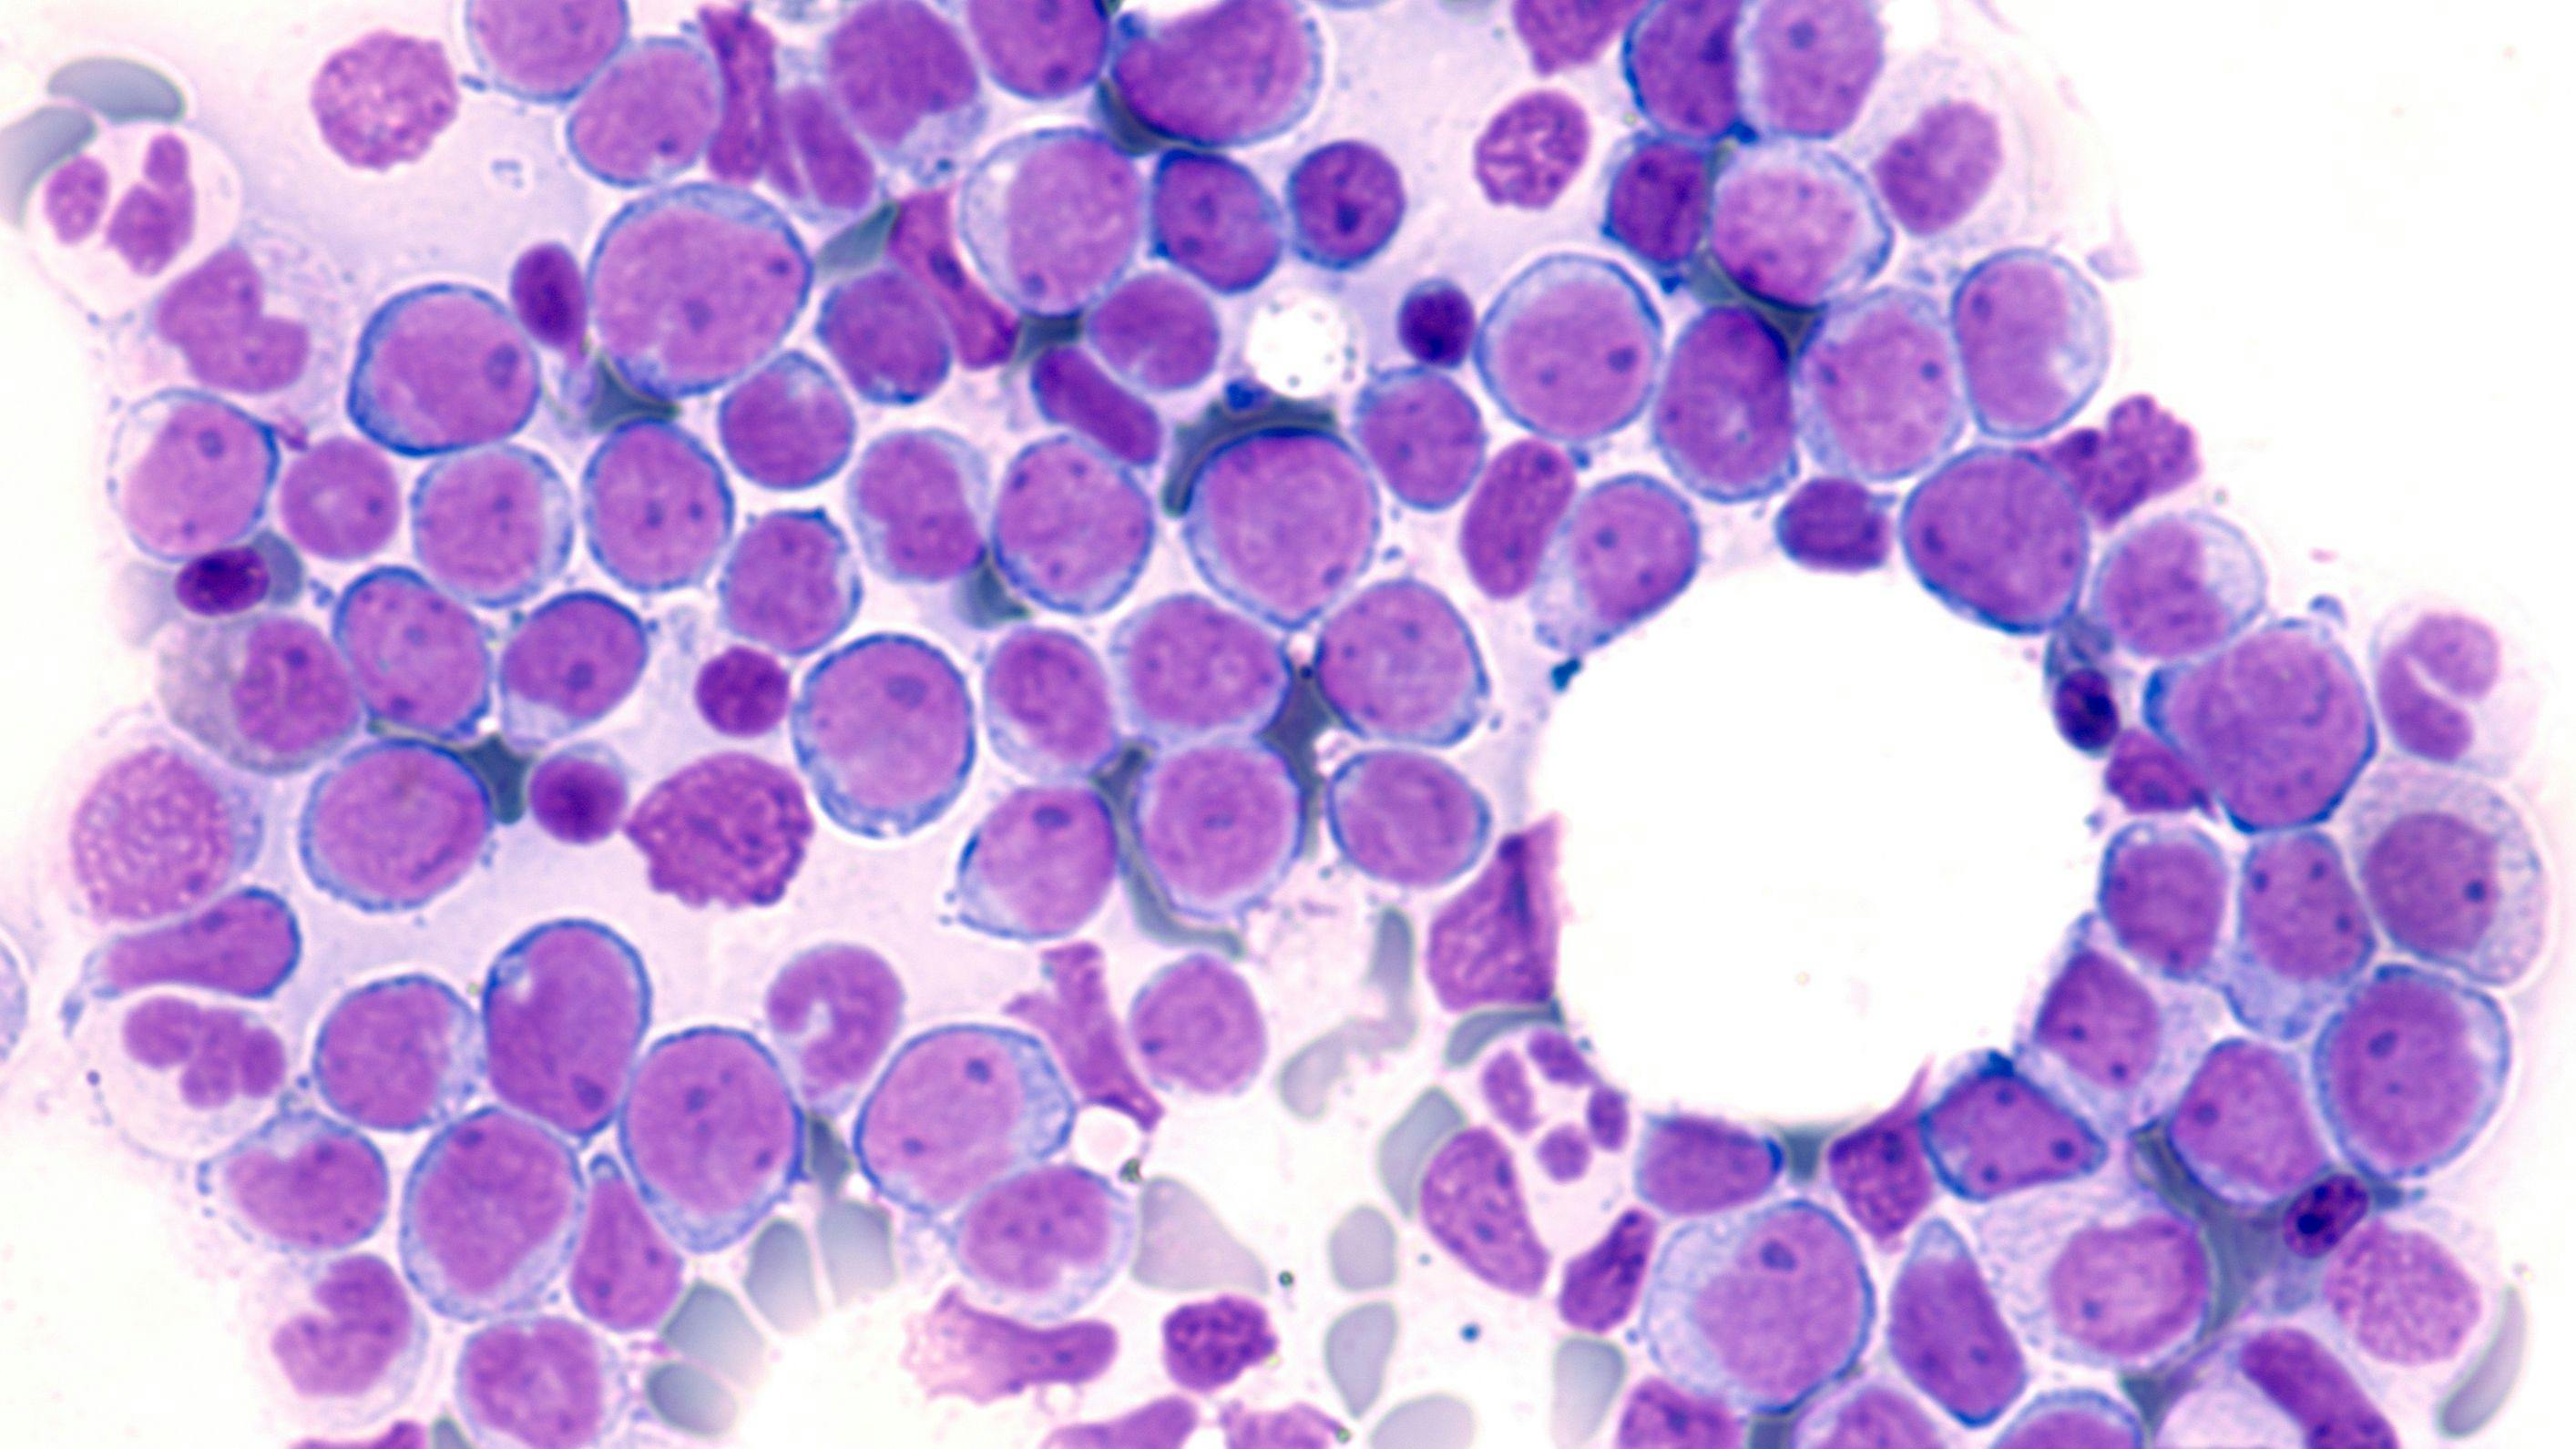 Leukemia Awareness: Photomicrograph of bone marrow aspirate showing myeloblasts of acute myeloid leukemia (AML), a cancer of white blood cells. | Image Credit: © David A Litman [stock.adobe.com] 